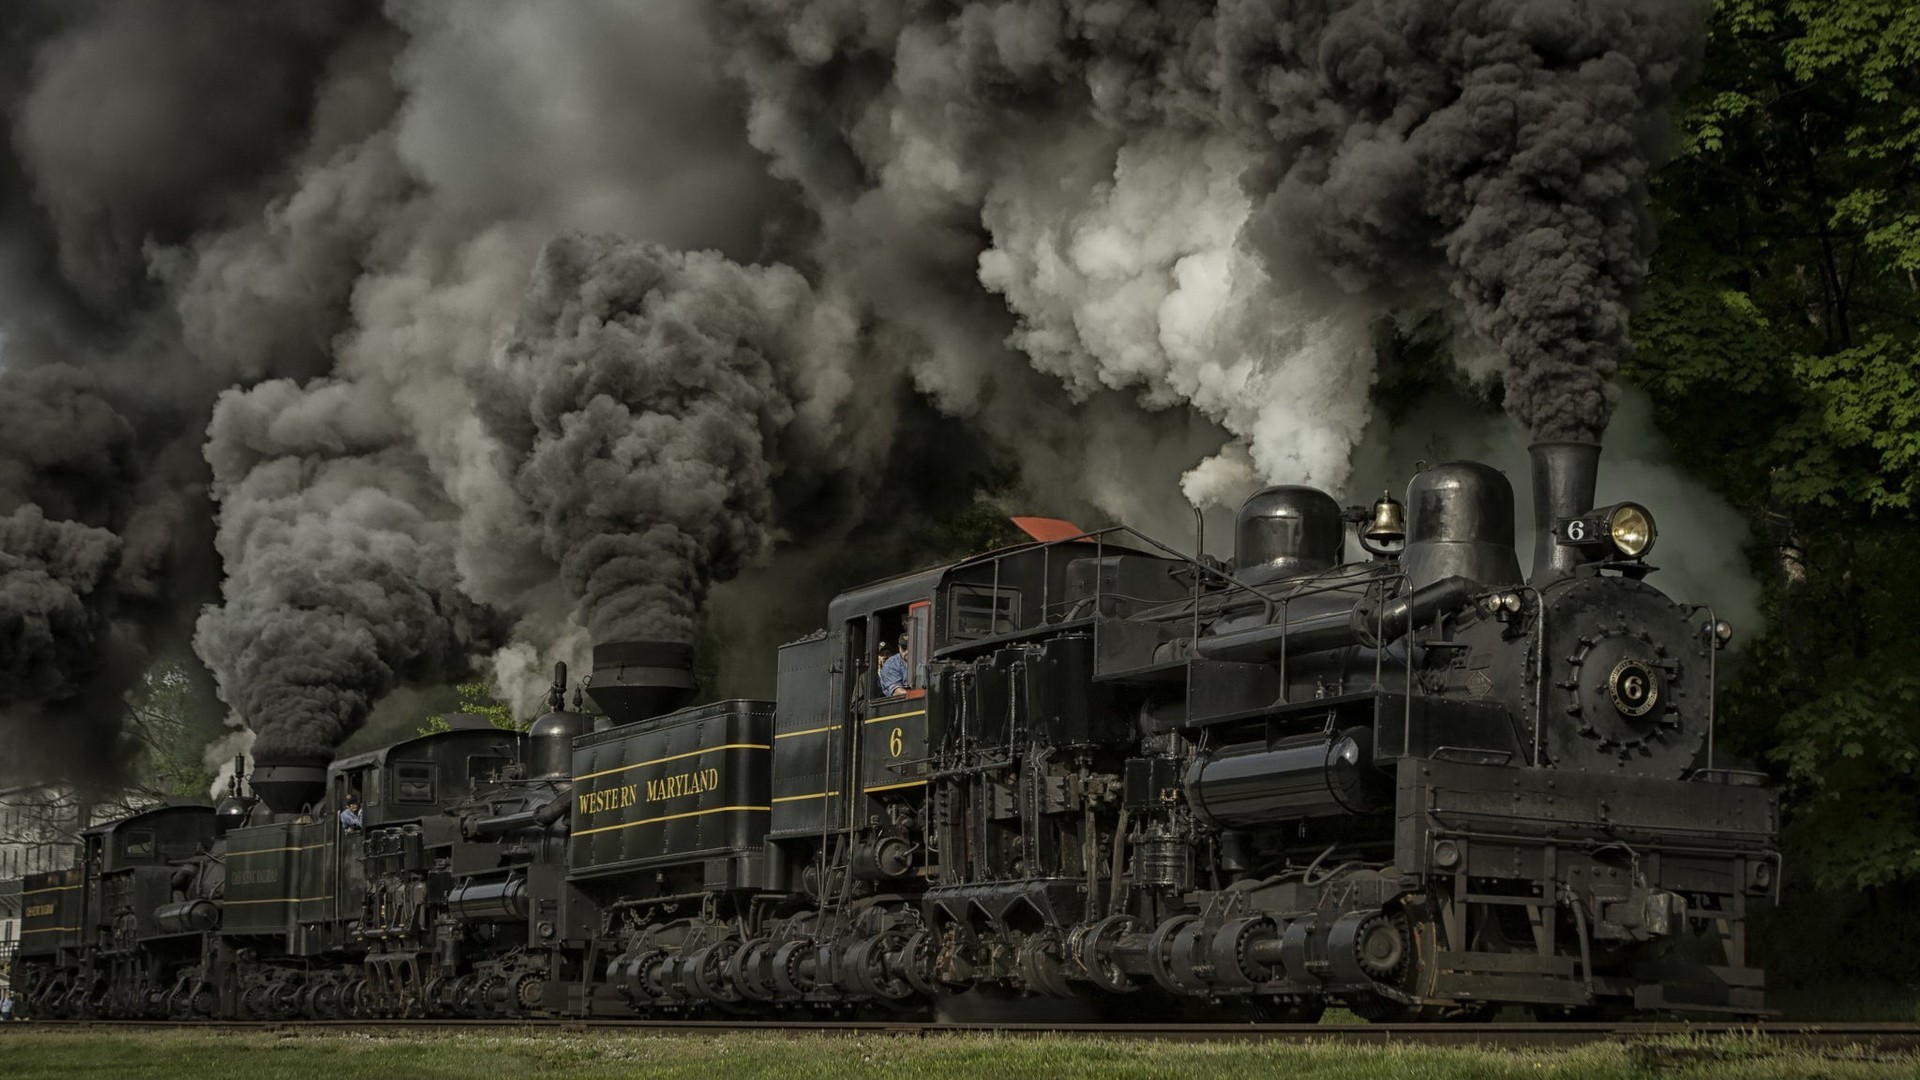 1920x1080 Steam locomotive in the cloud of black smoke